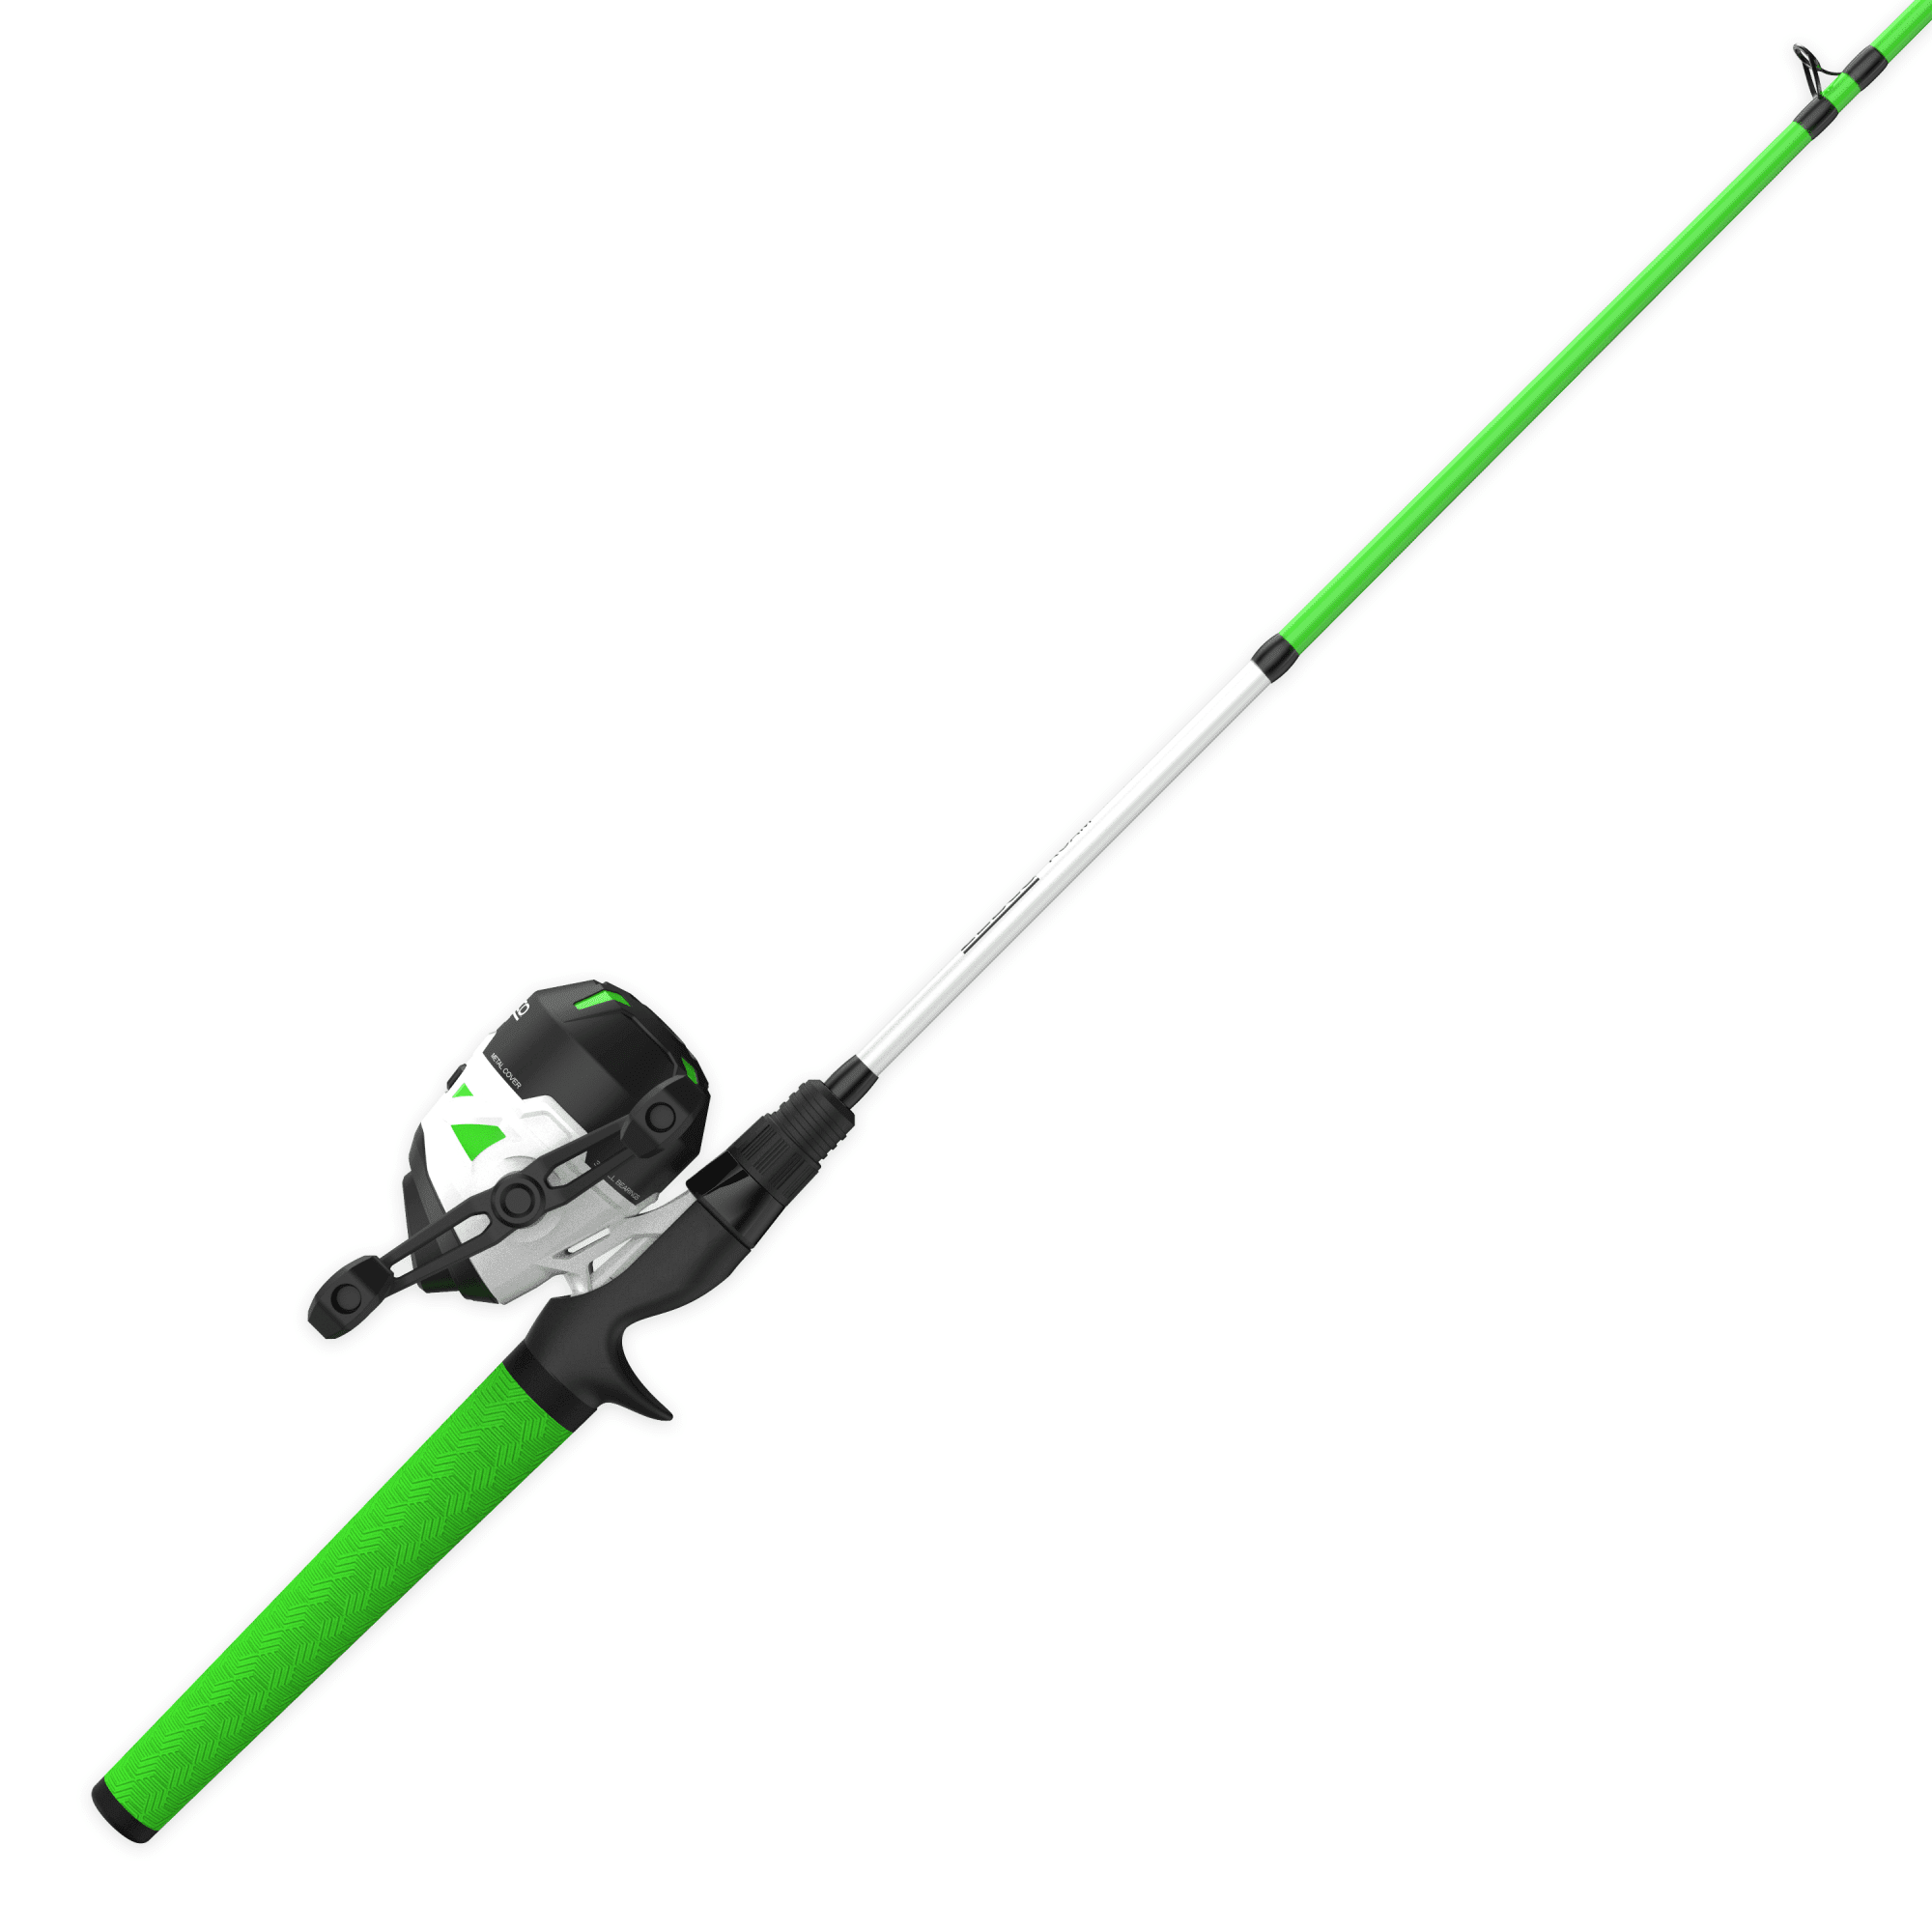 Zebco Roam Spincast Reel and Fishing Rod Combo, 6-Foot 2-Piece Fiberglass  Fishing Pole with ComfortGrip Handle, QuickSet Anti-Reverse Fishing Reel